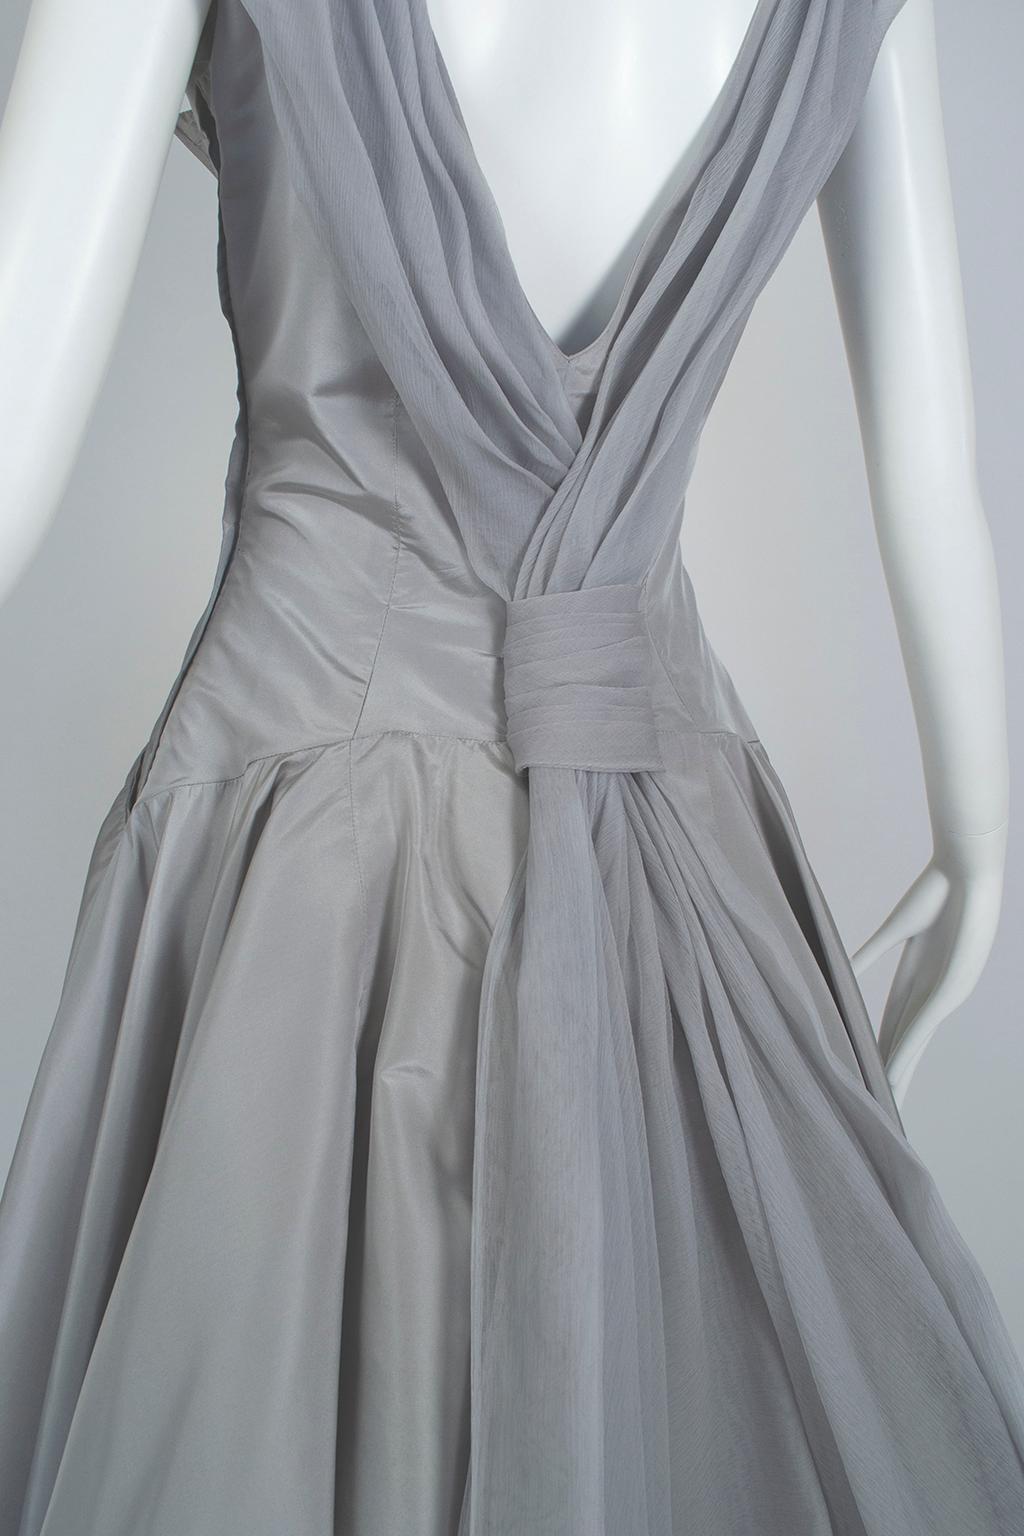 Werlé Beverly Hills Dove Gray Bib-Front Ballerina Dress - Medium, 1950s ...